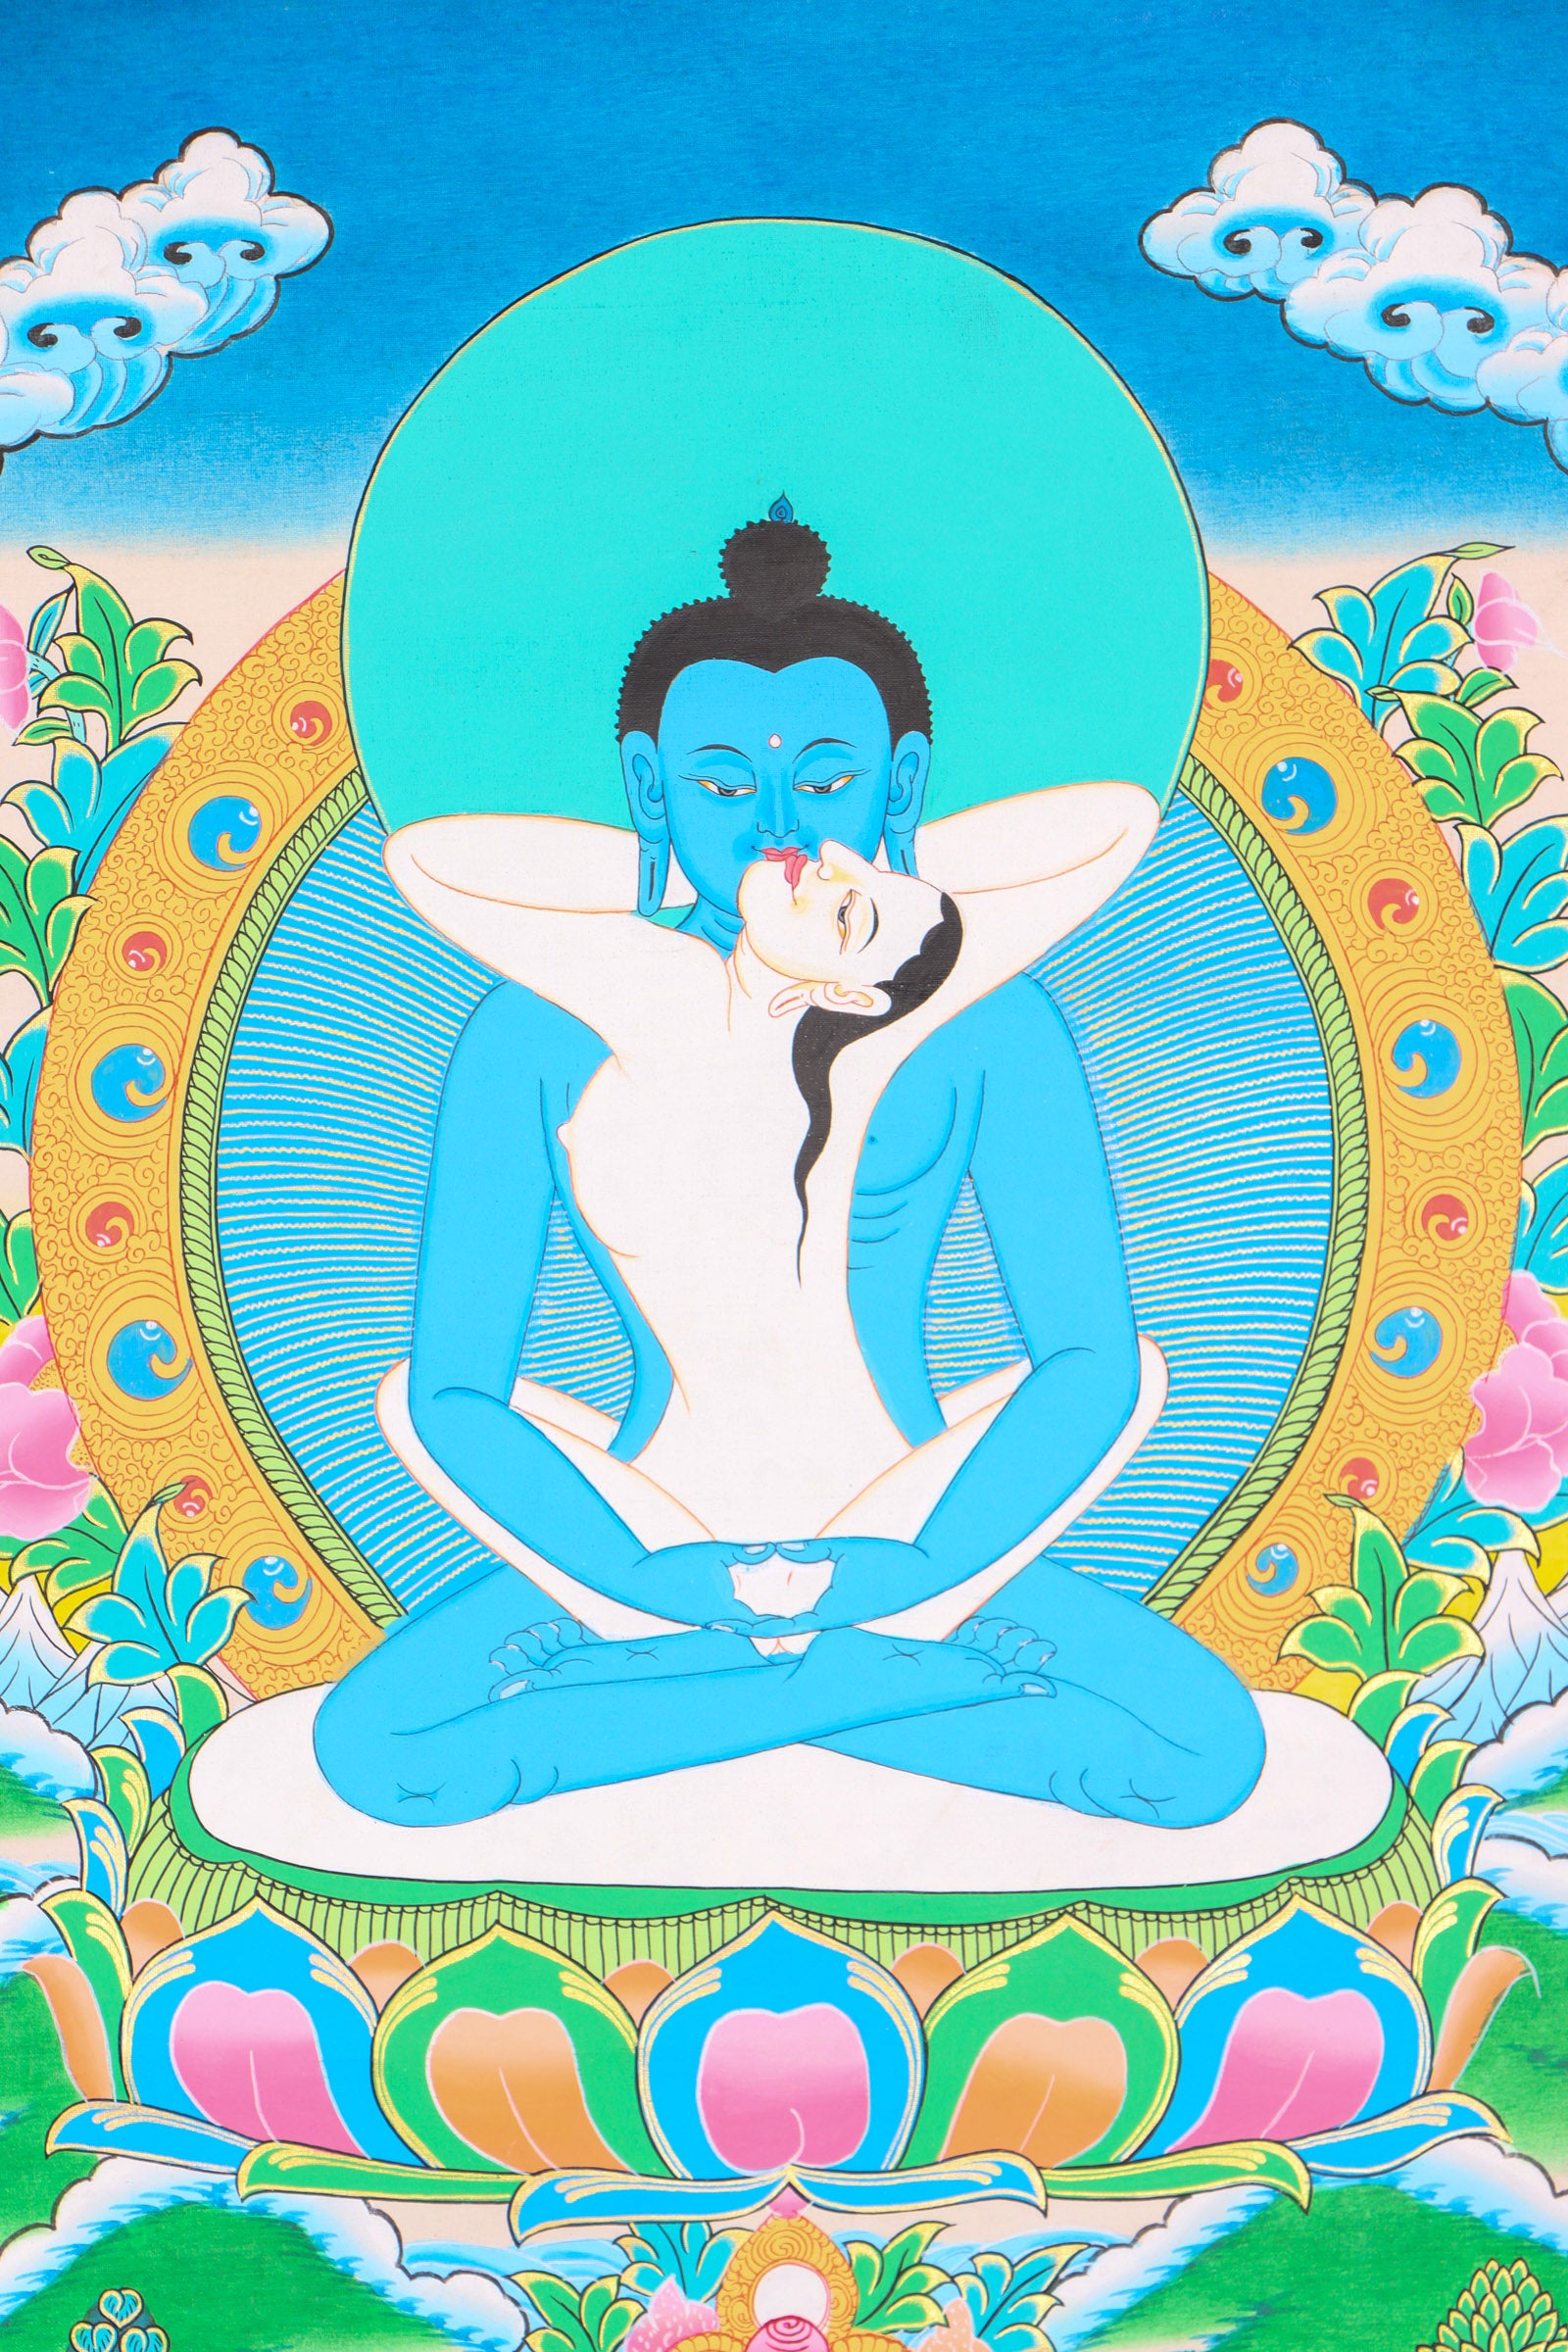 Buddha Shakti Thangka Painting for spiritual growth.